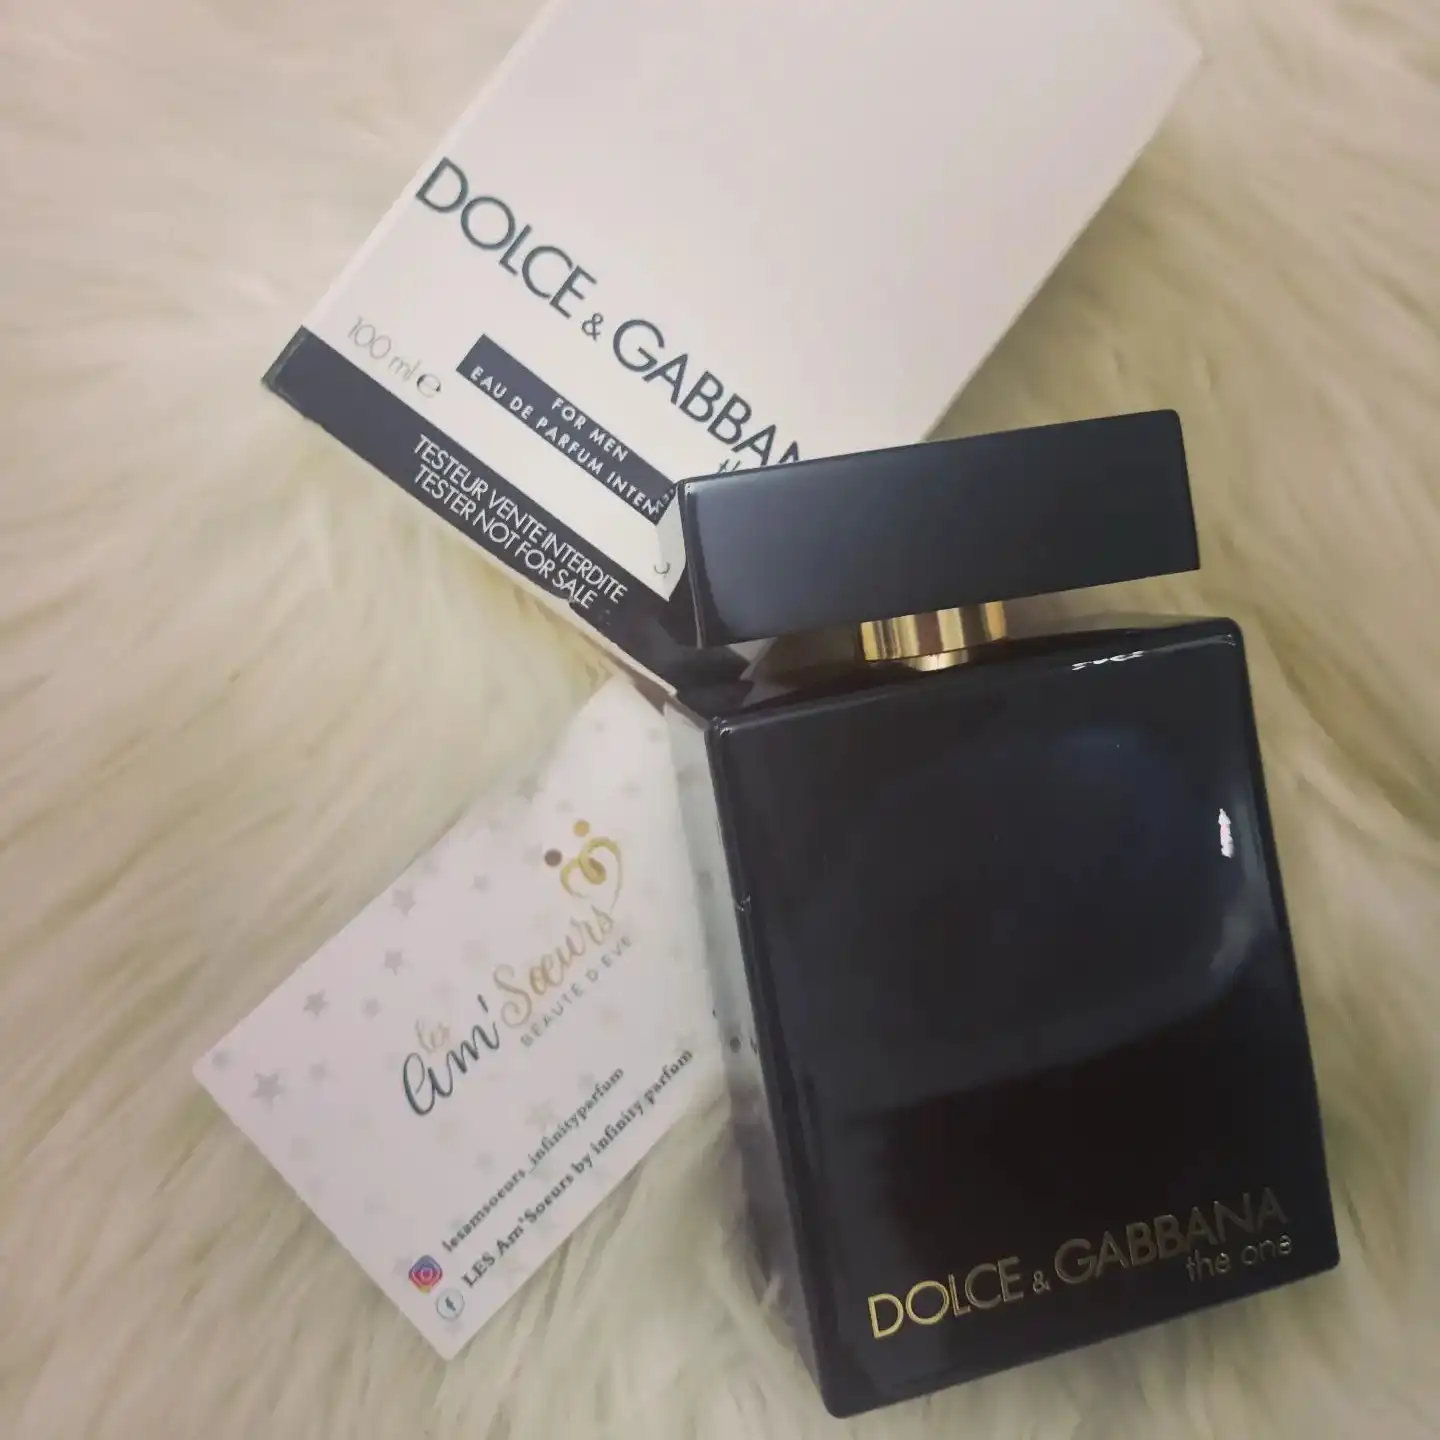 عطر ادکلن دولچه گابانا د وان ادو پرفیوم اینتنس مردانه | Dolce & Gabbana The One For Men EDP Intense